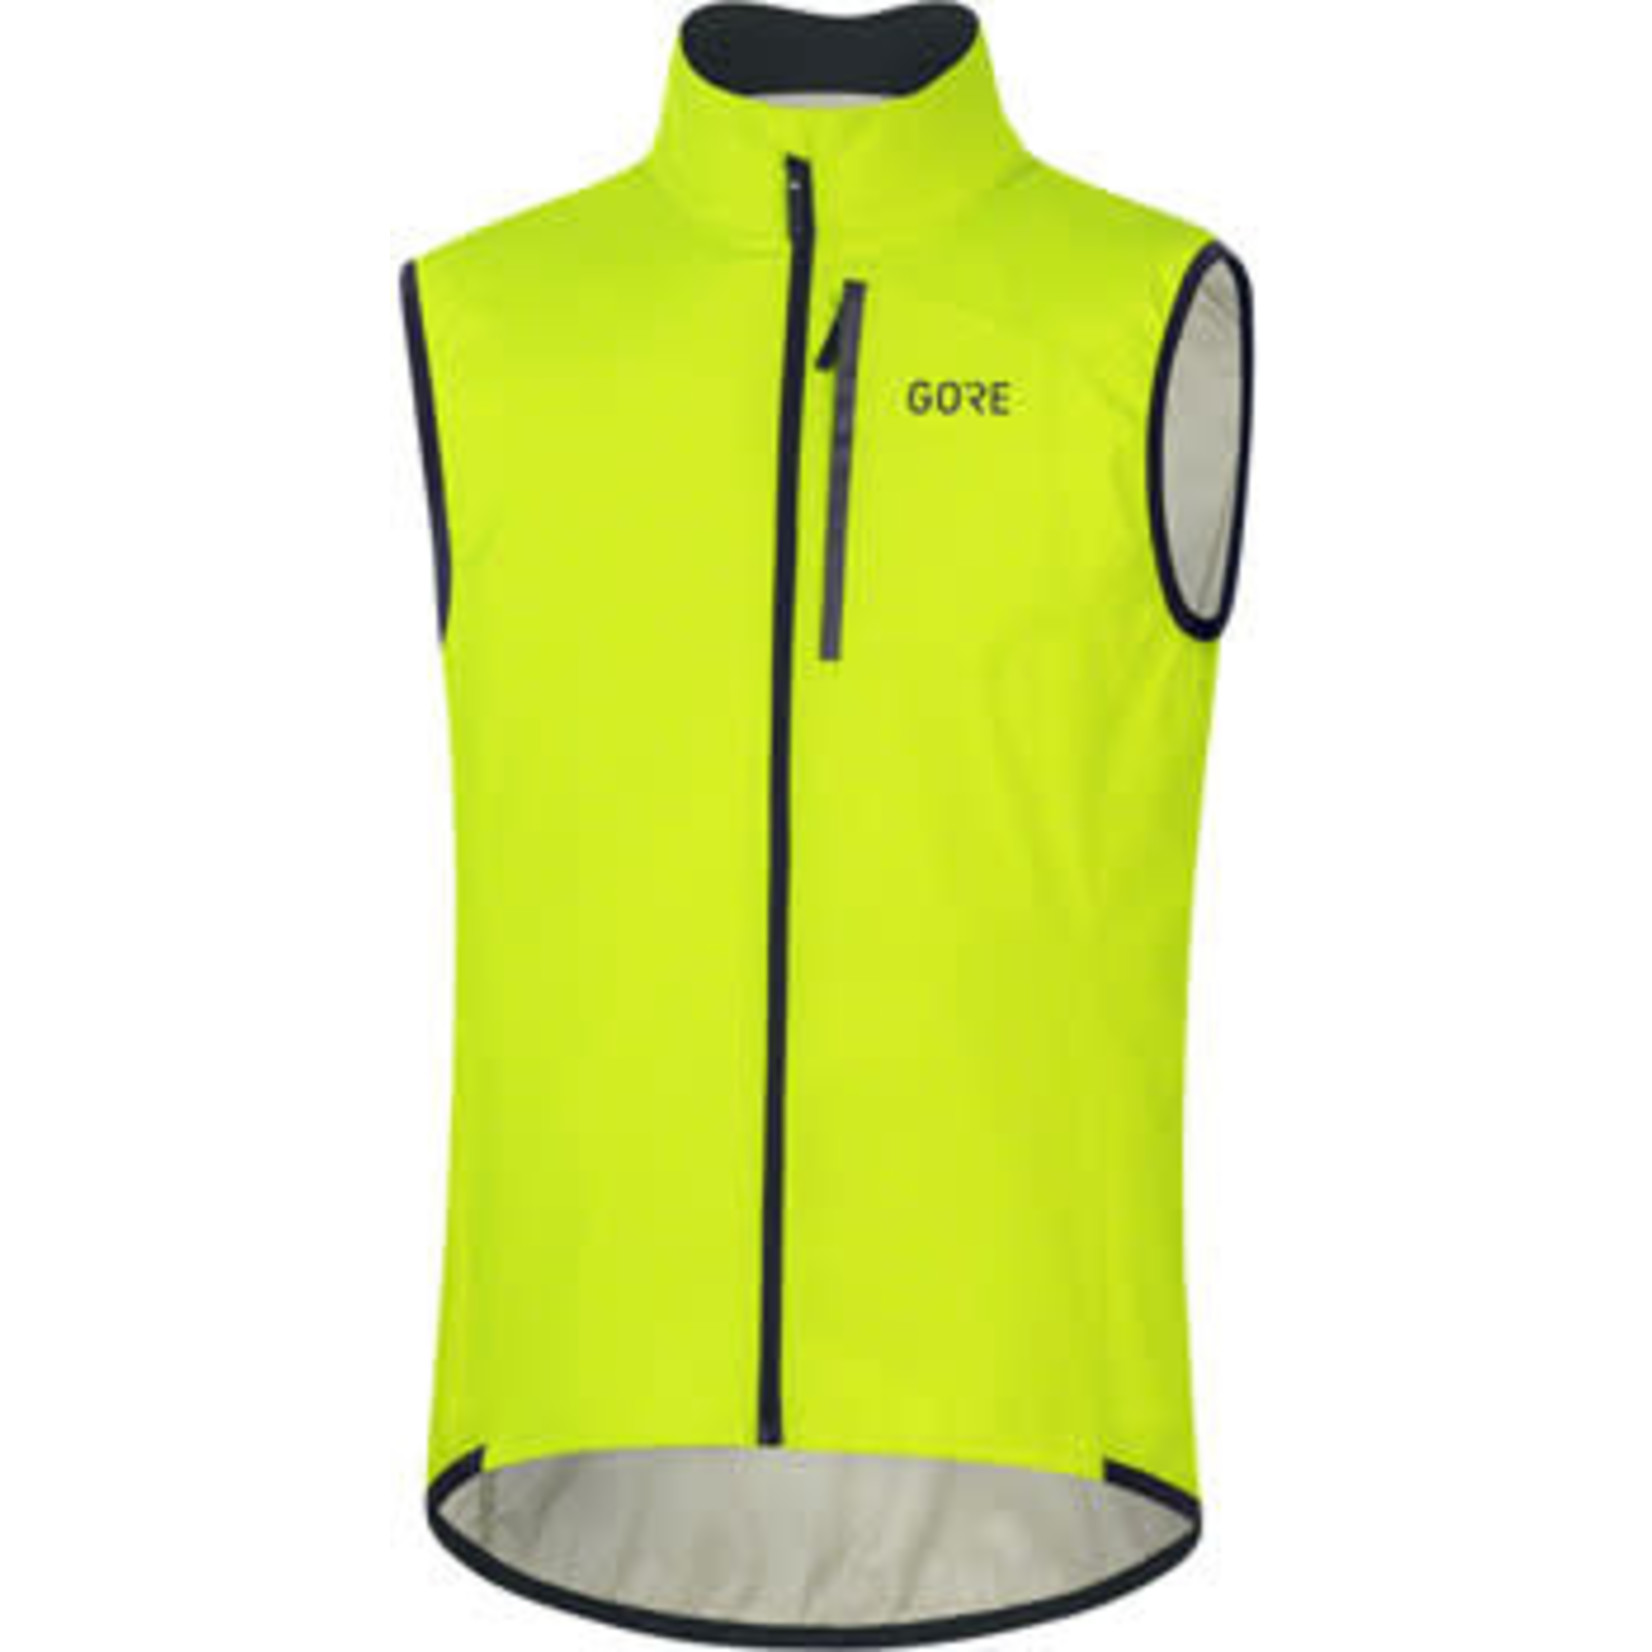 GORE GORE Spirit Vest - Neon Yellow, Men's, Medium